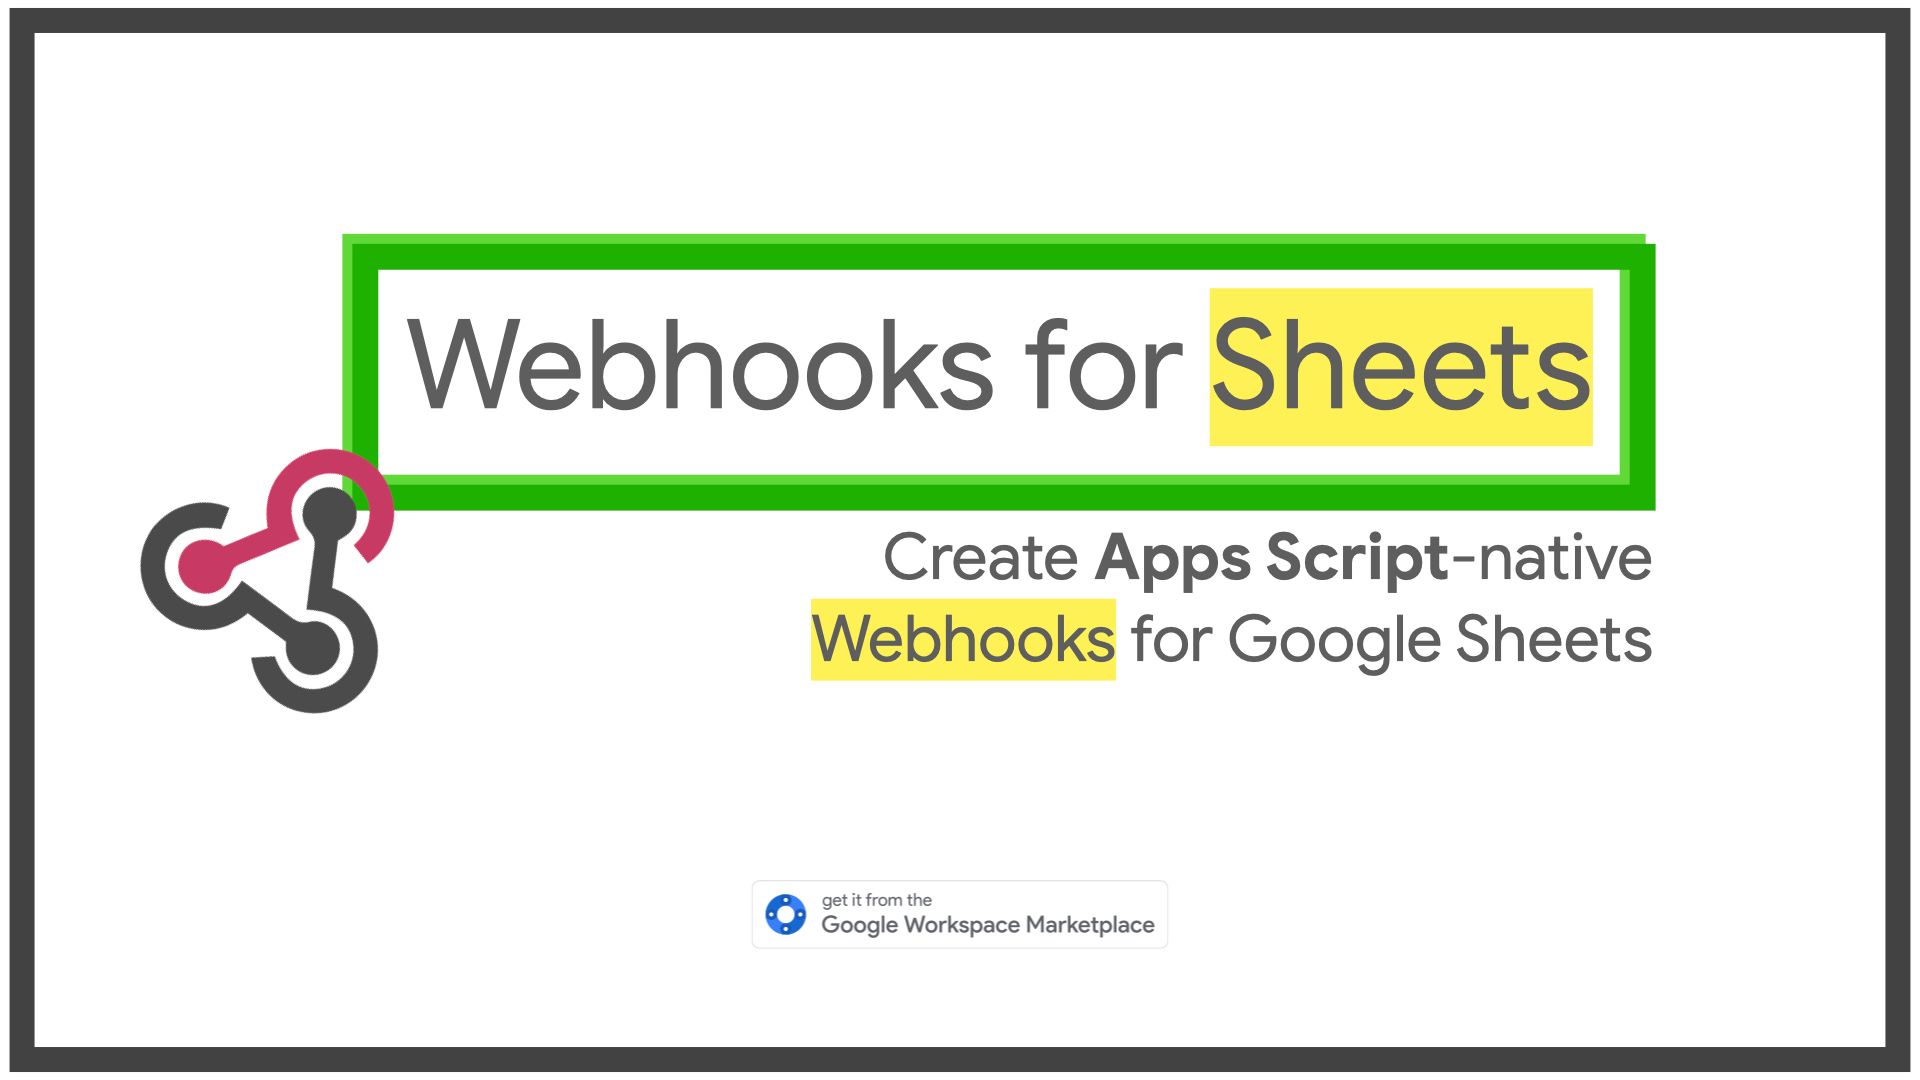 Webhooks for Sheets — Create Apps Script-native Webhooks for Google Sheets